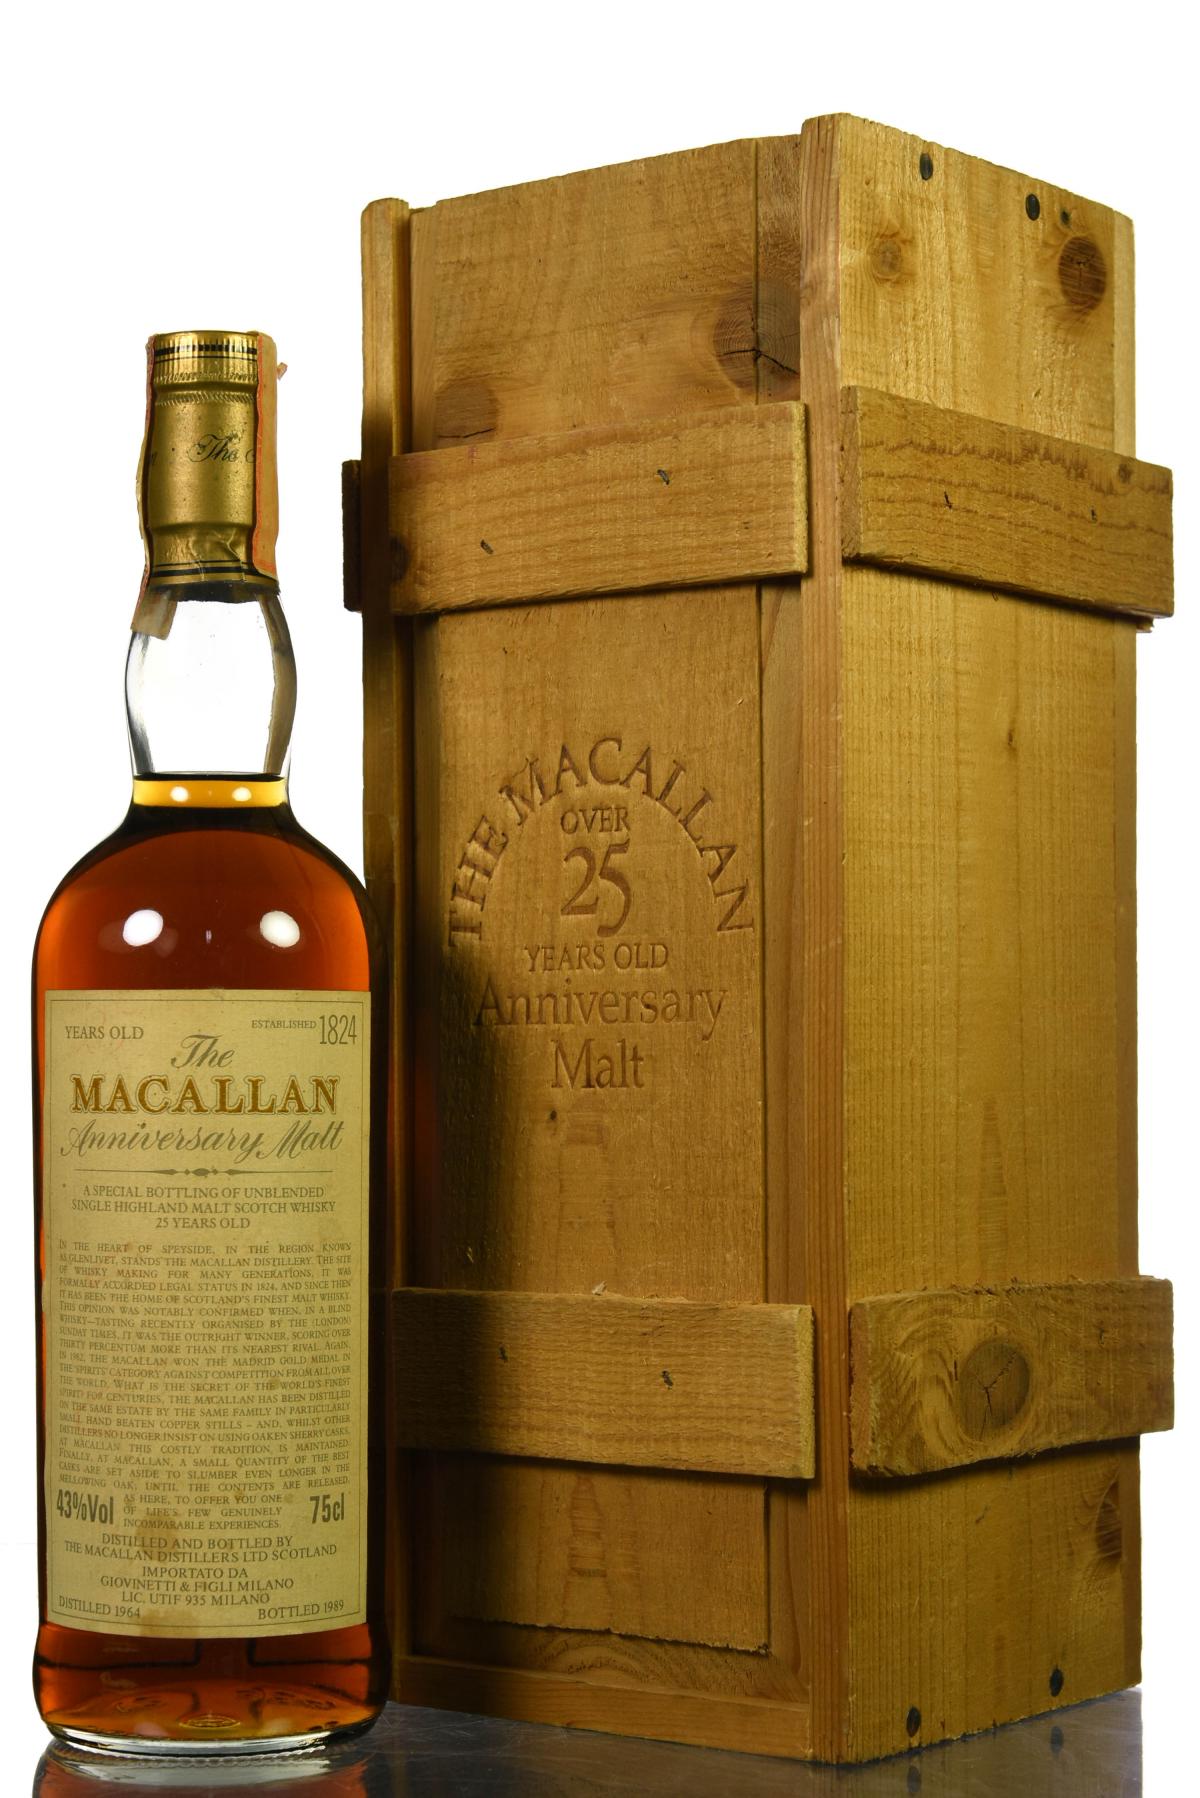 Macallan 1964-1989 - 25 Year Old - Anniversary Malt